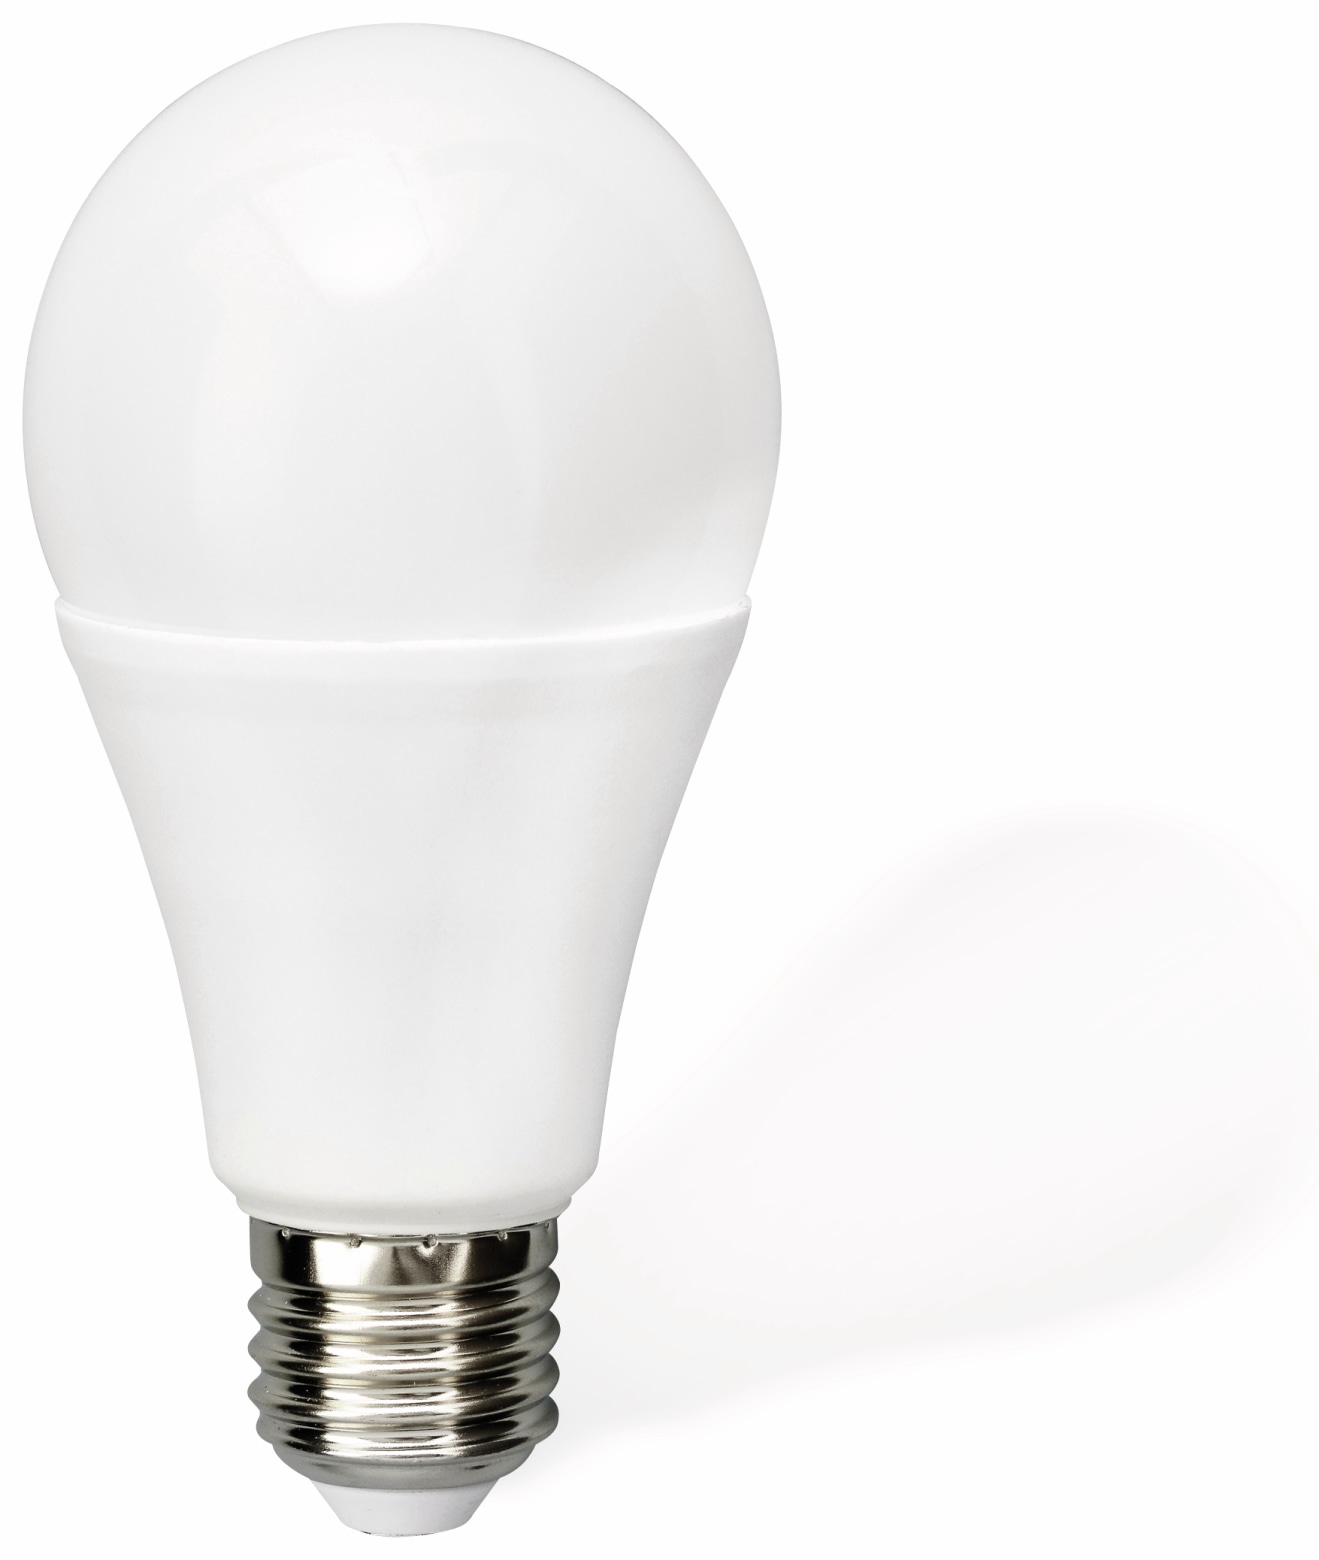 MÜLLER-LICHT LED-Lampe 400221, E27, EEK: E, 15 W, 1520 lm, 2700 K